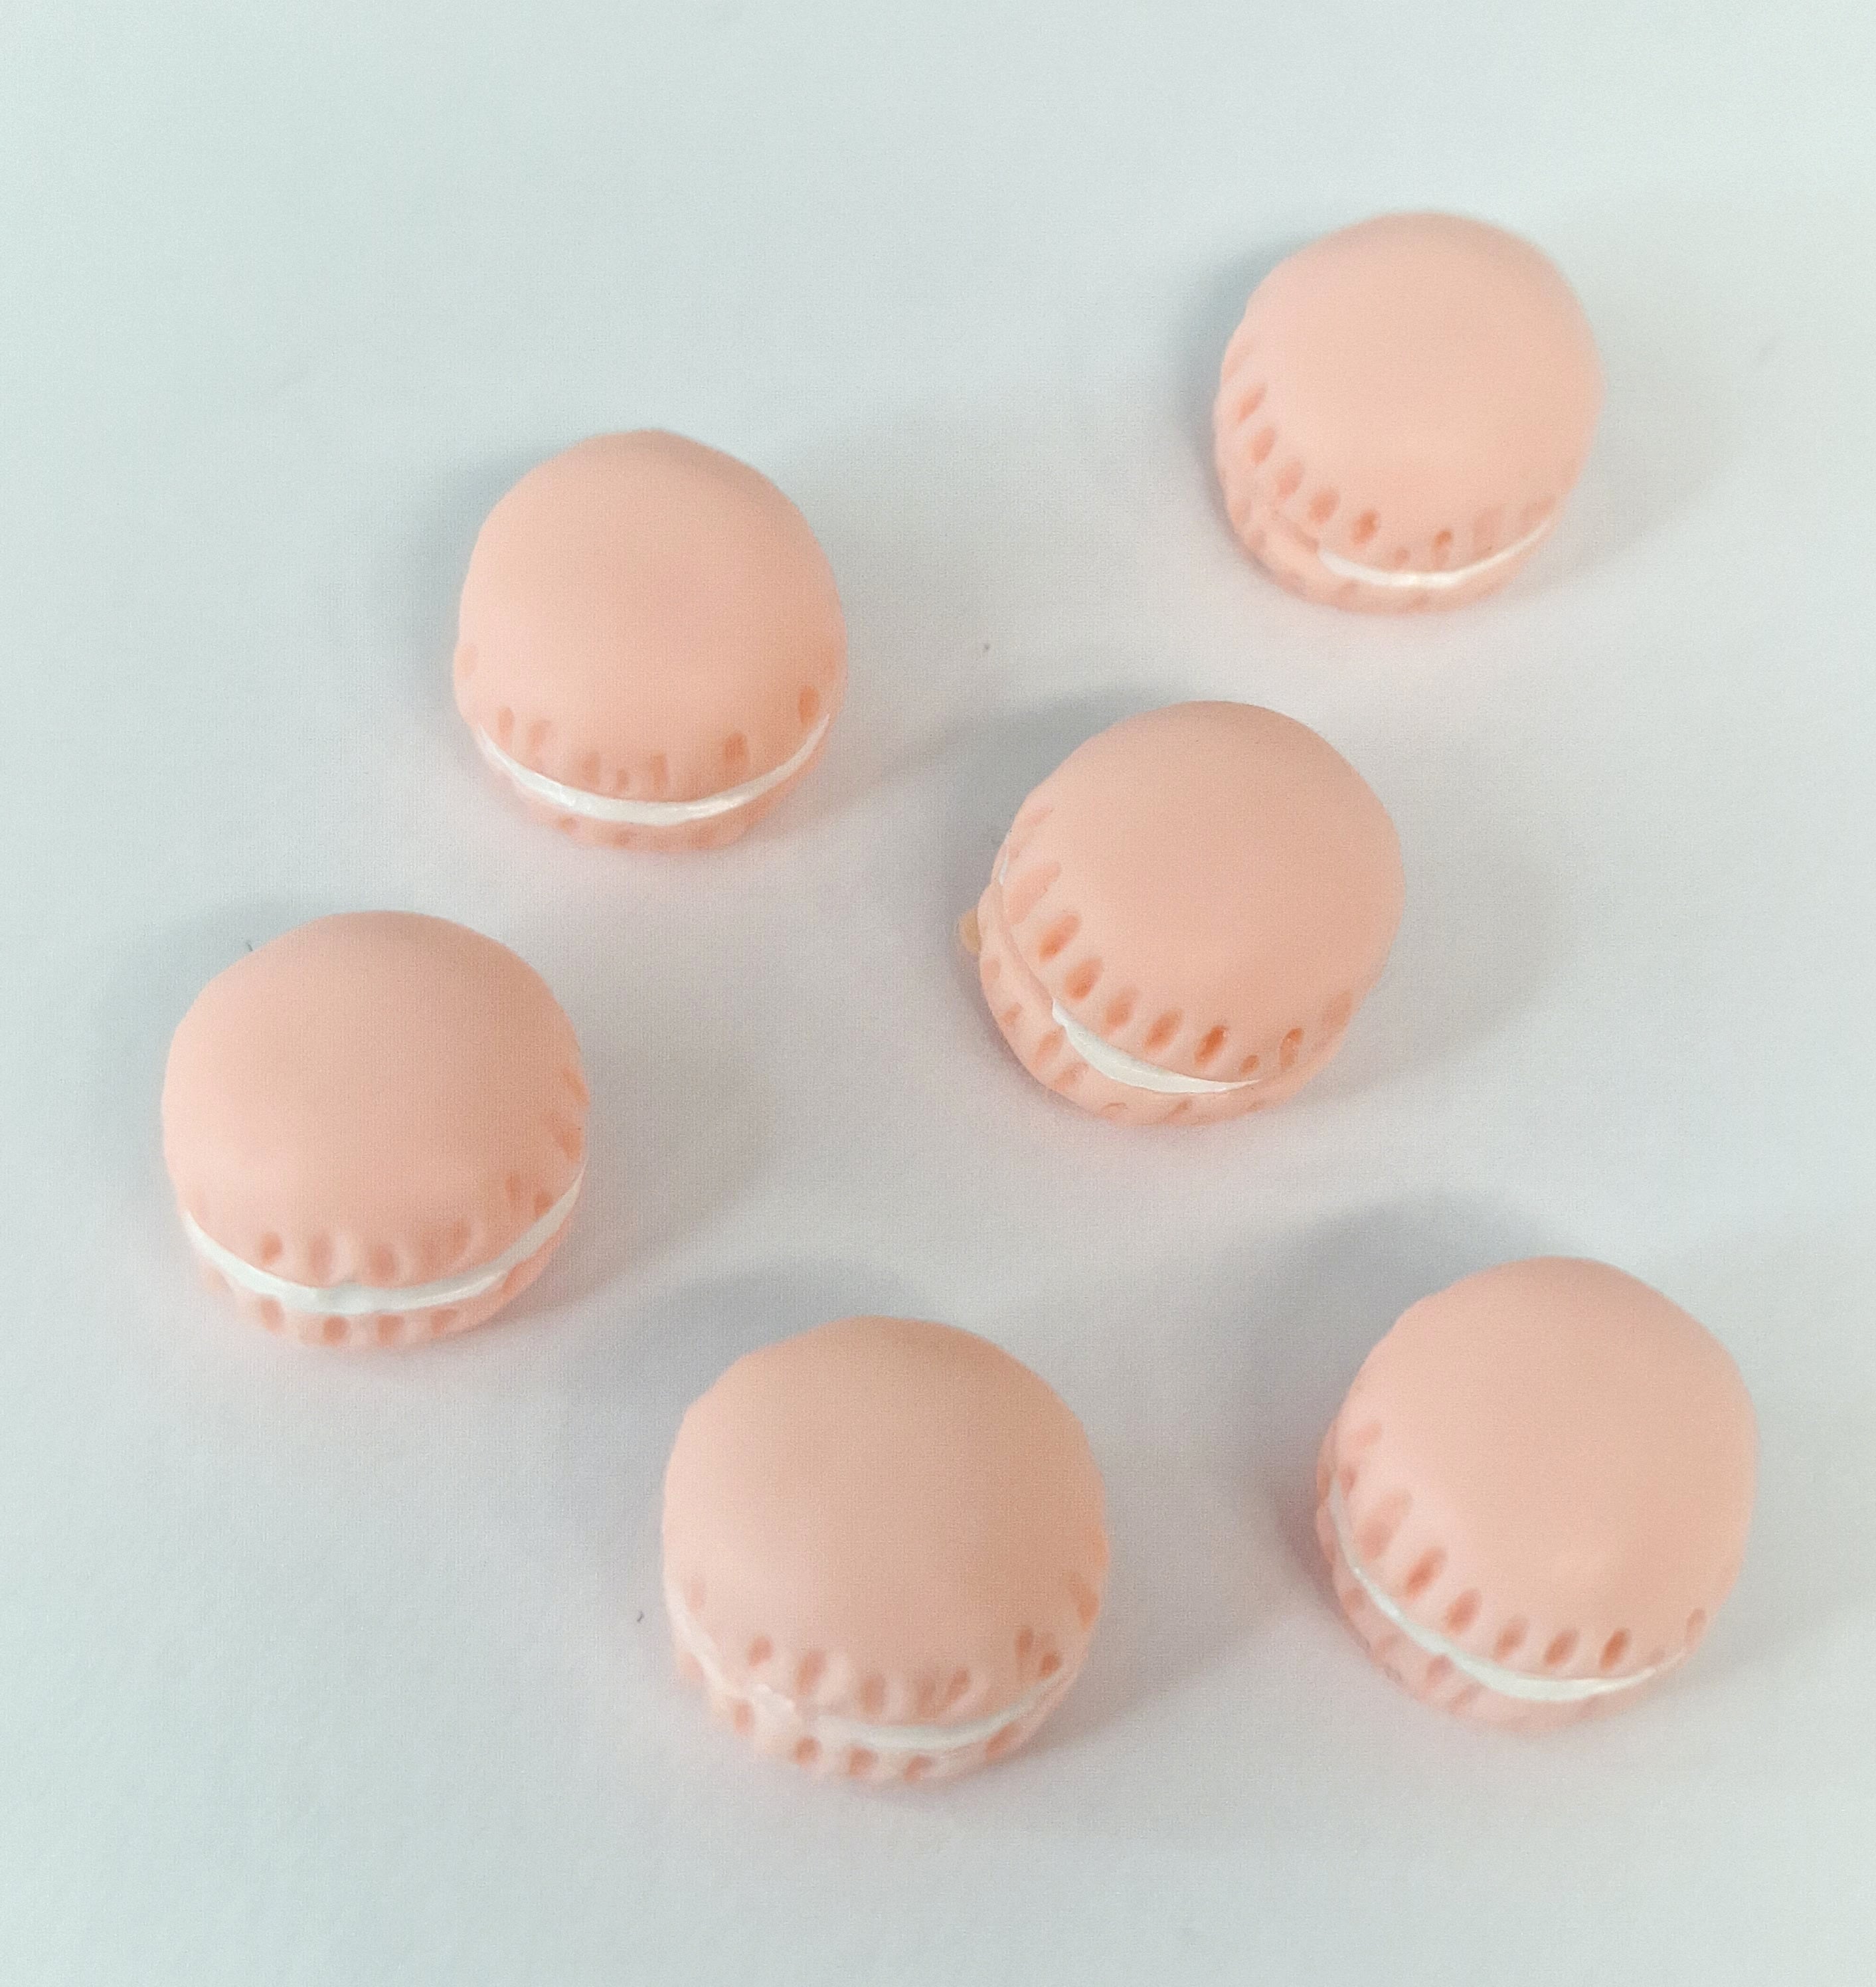 MajorCrafts 6pcs 13mm Pale Pink Flat Back Miniature Cookies and Cream Kawaii Cabochons